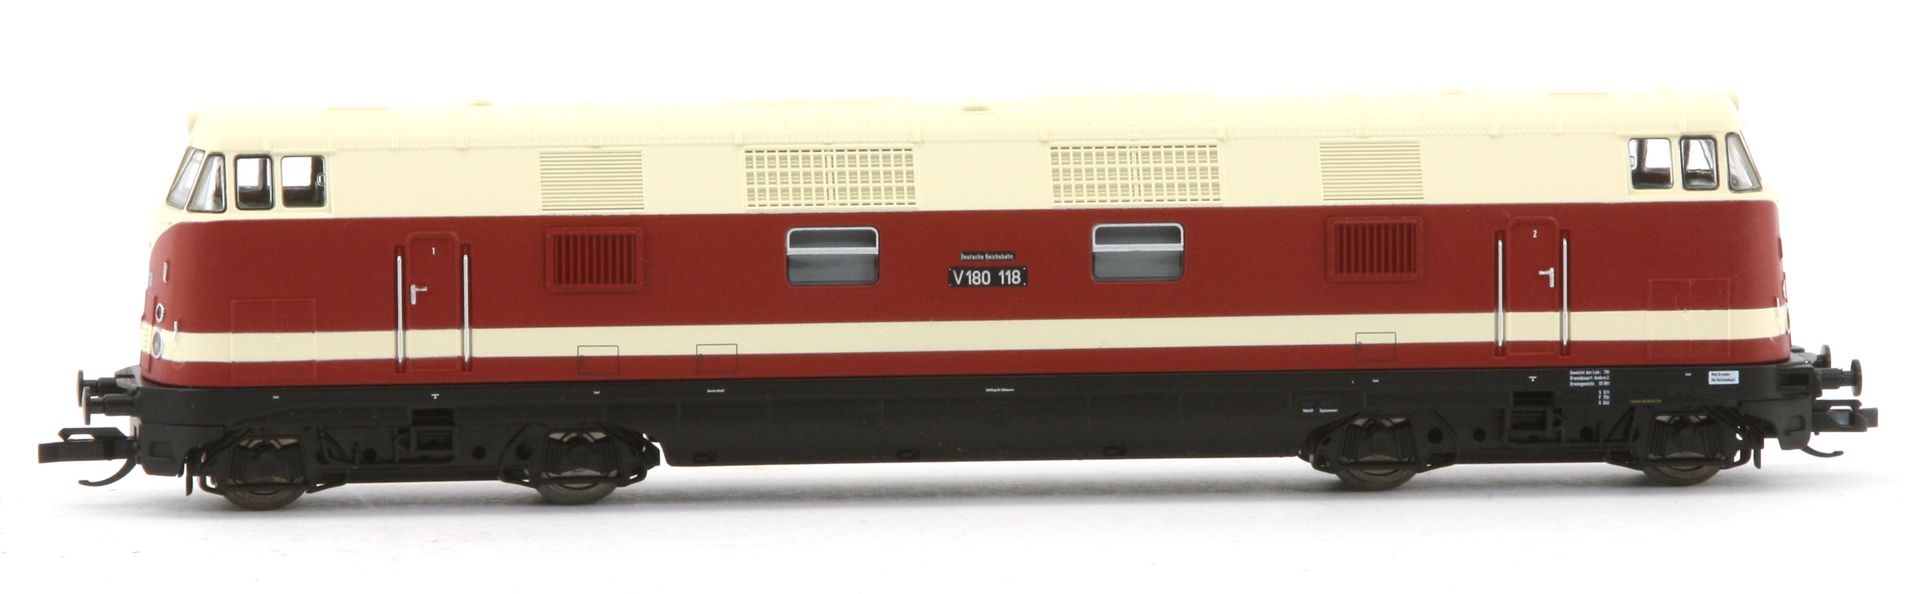 Piko 47284-2 - Diesellok V 180 118, DR, Ep.III